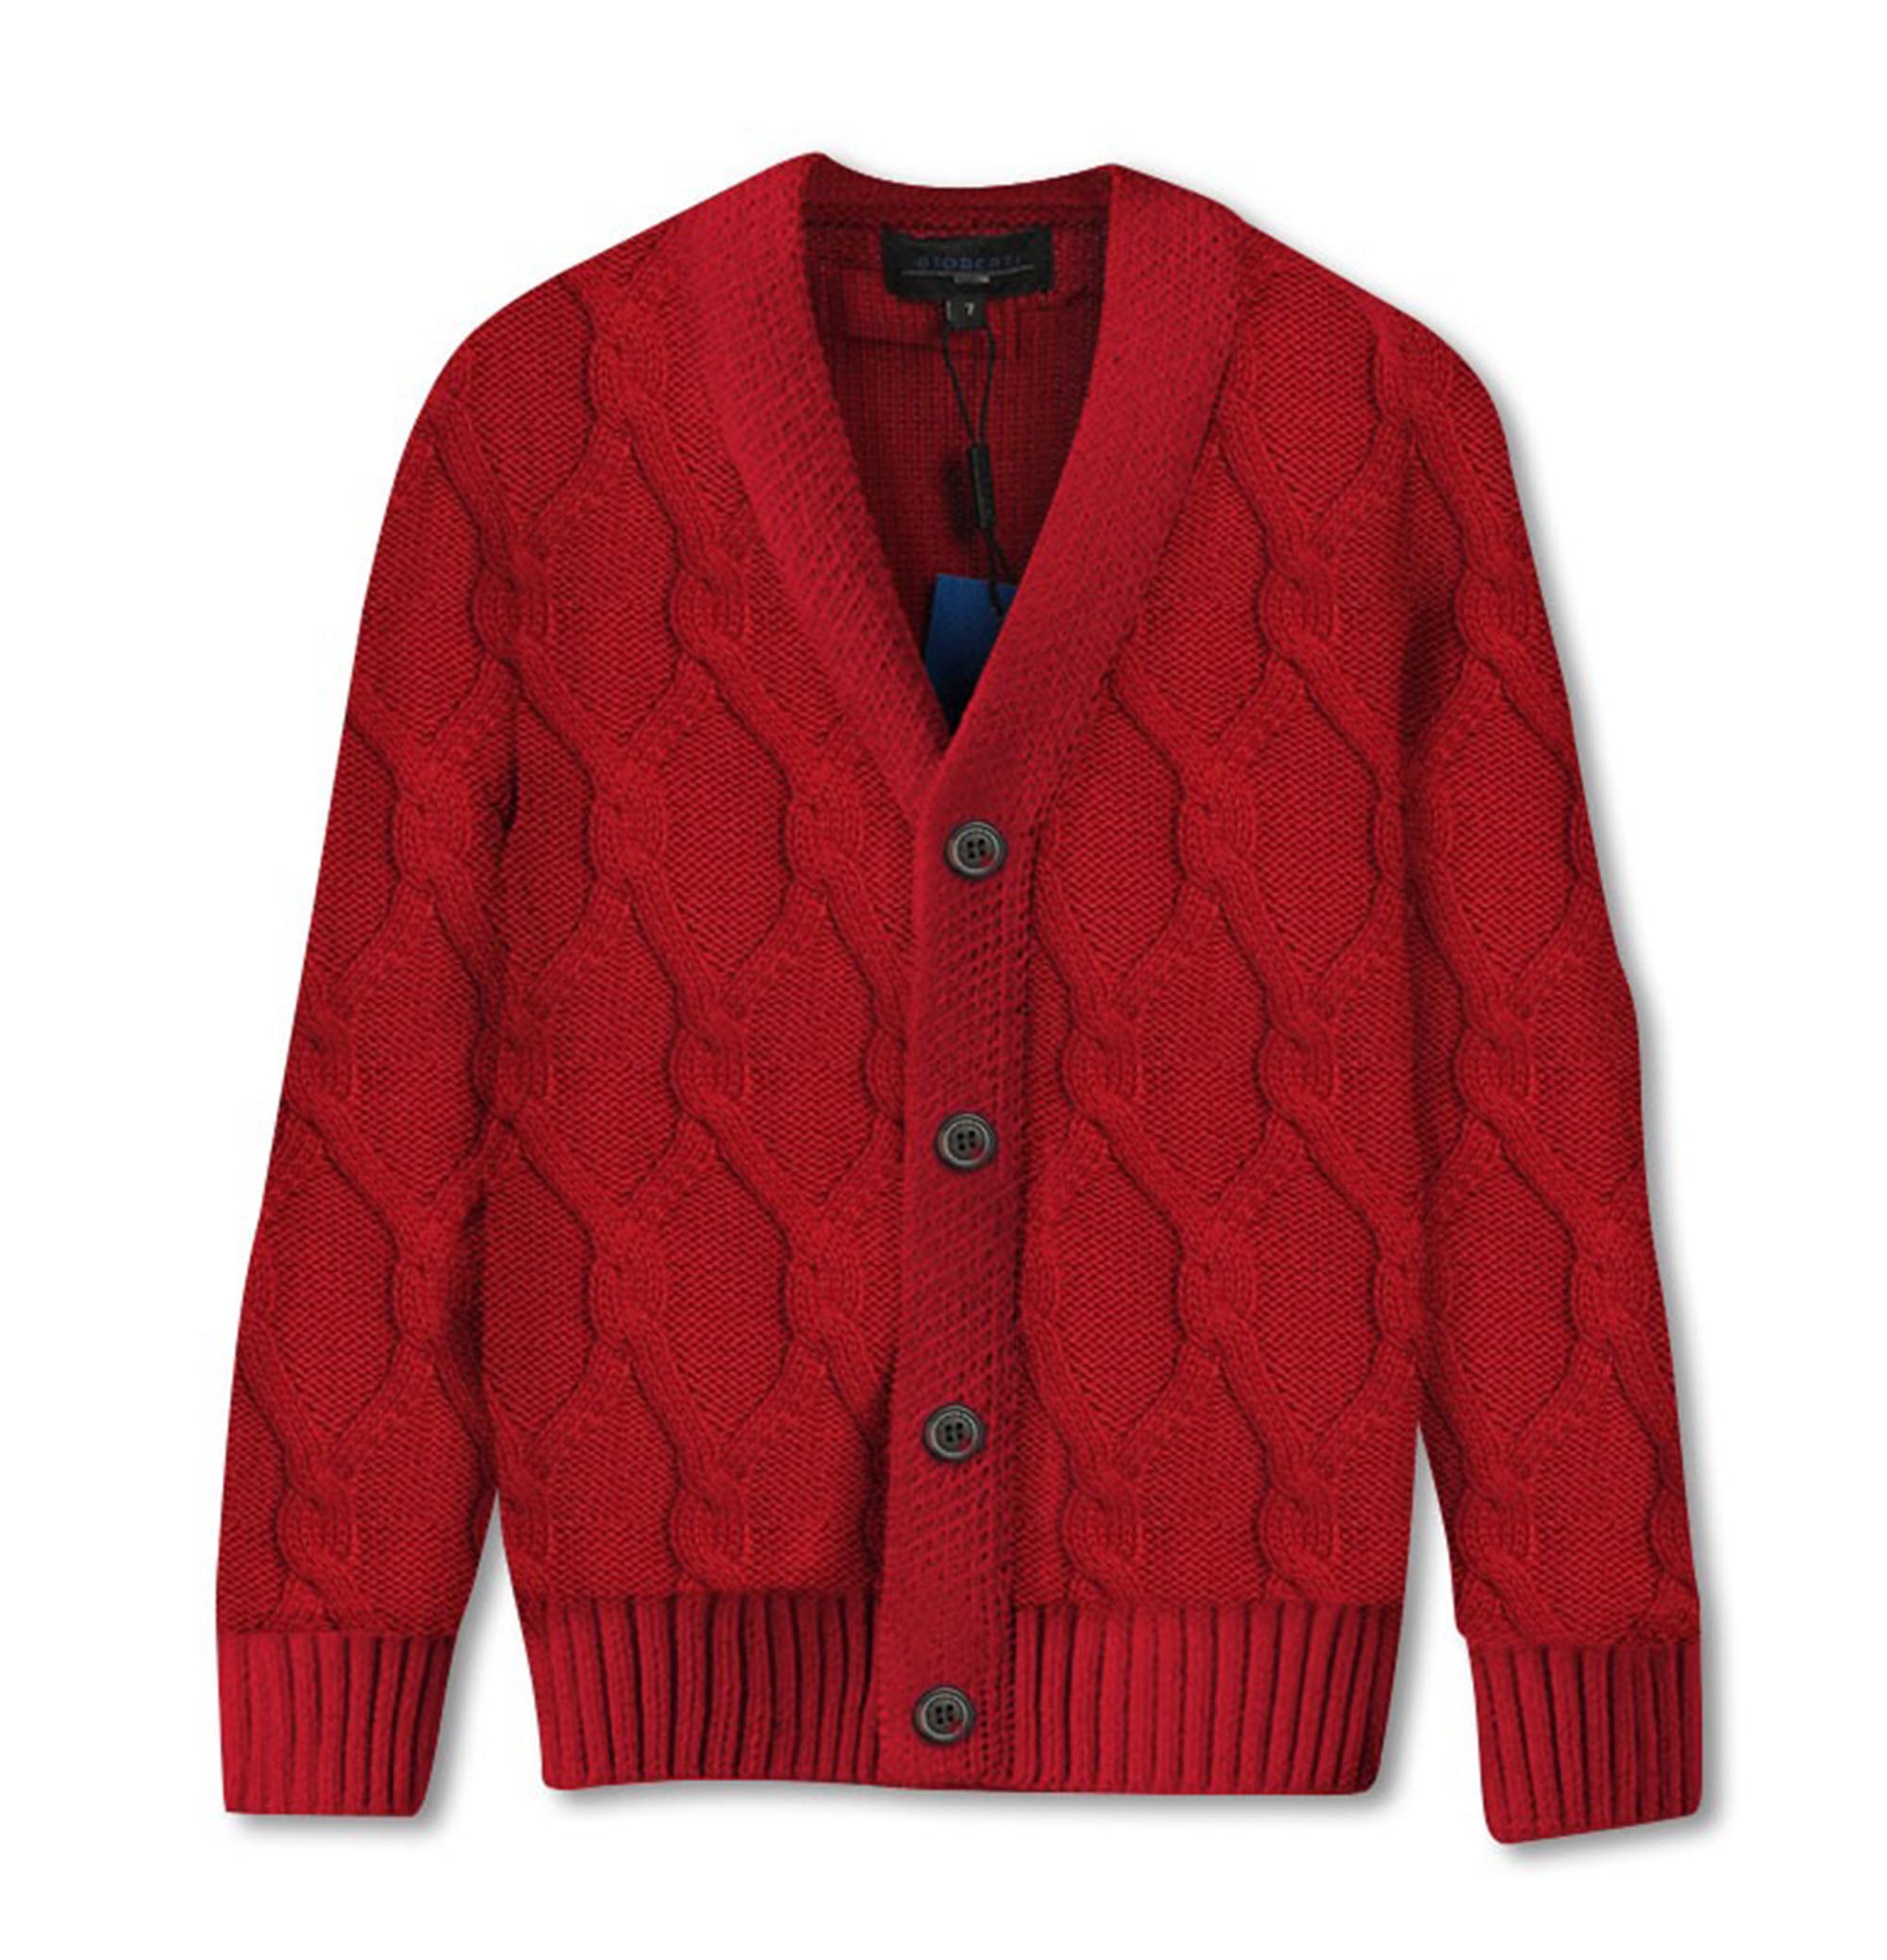 Mallimoda Boys Long Sleeve V-Neck Button Cardigan Knit Sweater Coat 